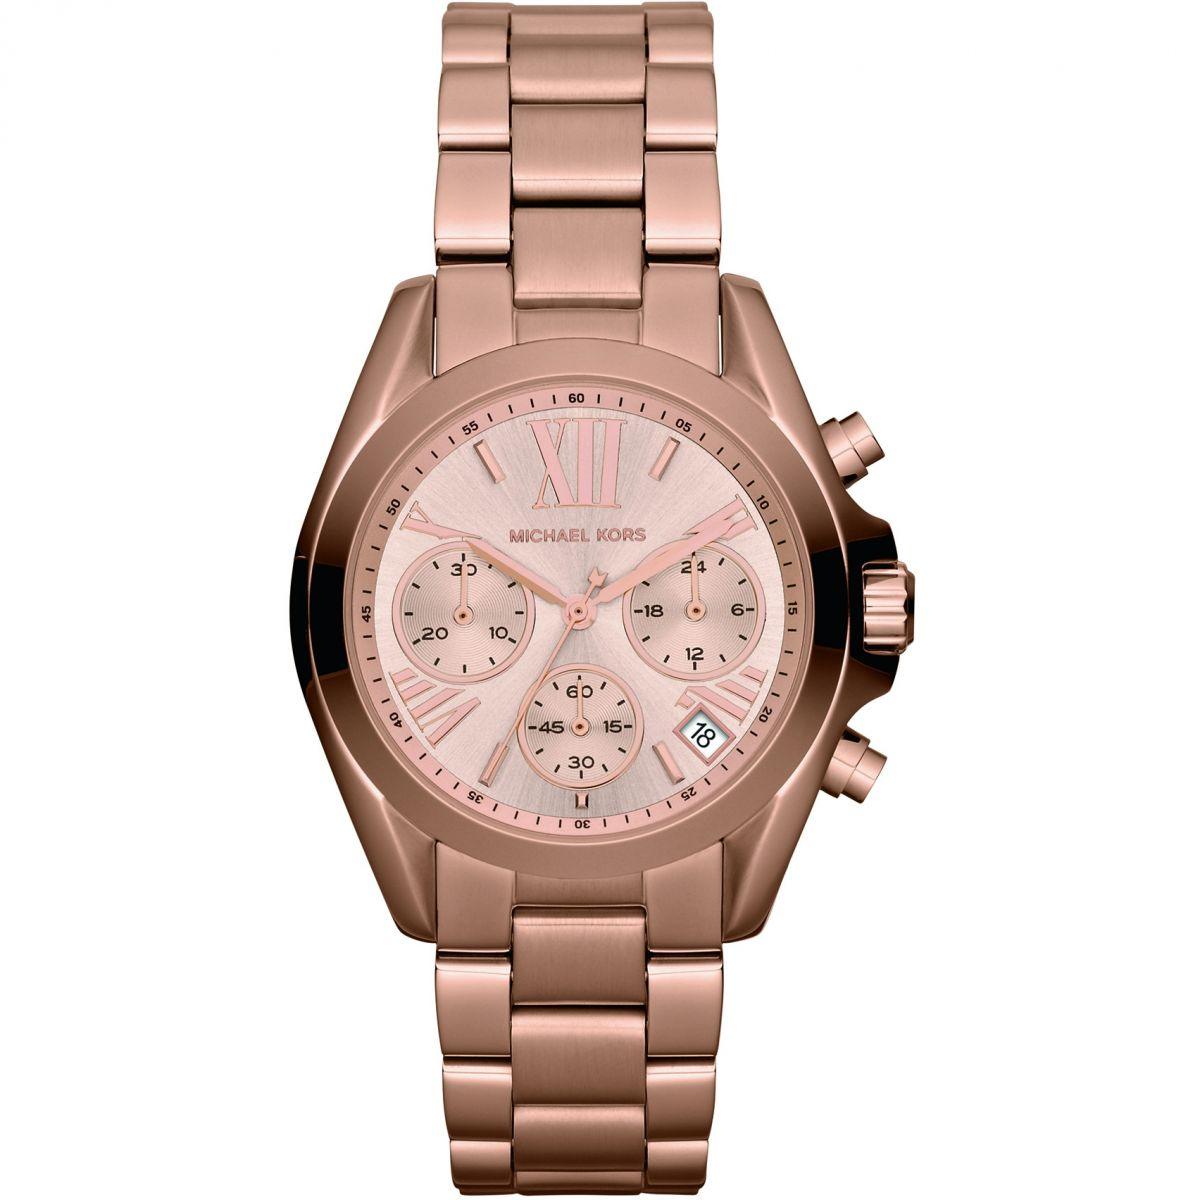 Lady's Michael Kors MK5799 Bradshaw watch pink gold - Obeezi.com